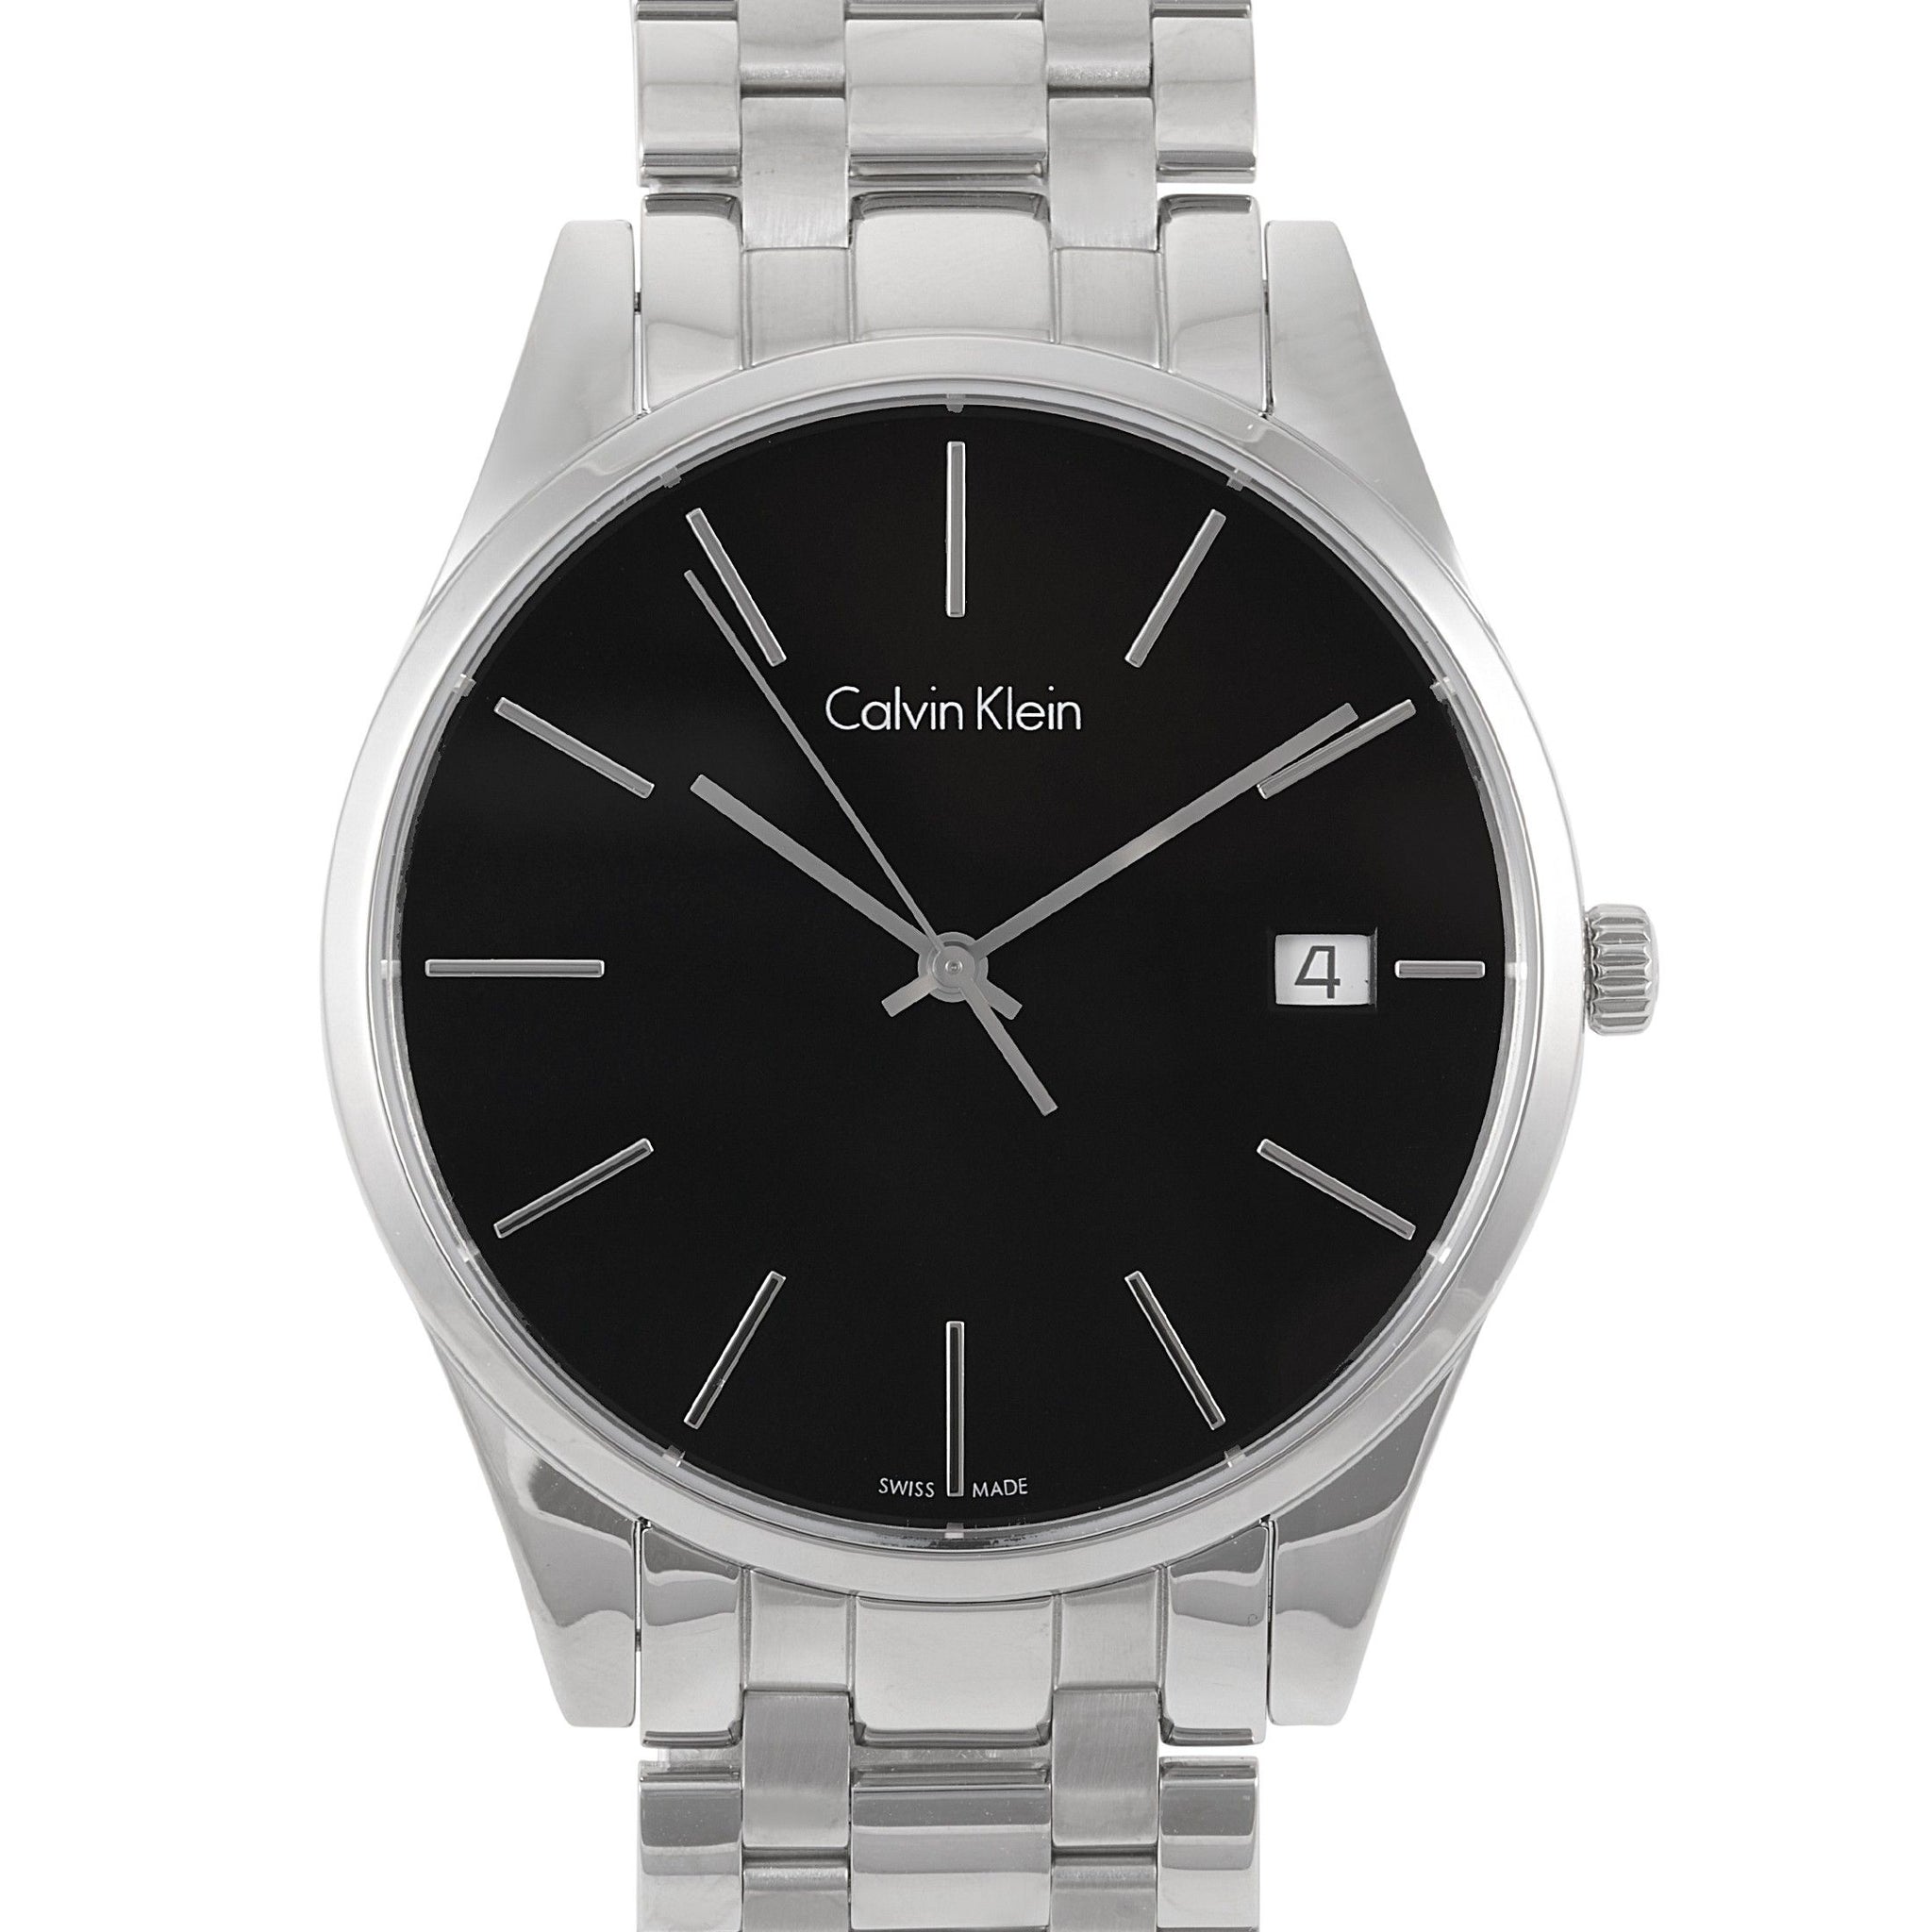 NEW Calvin Klein Time Steel Mens Watches - Black Dial K4N21141 全新 Calvin Klein Time 鋼製男士手錶 - 黑色錶盤 K4N21141